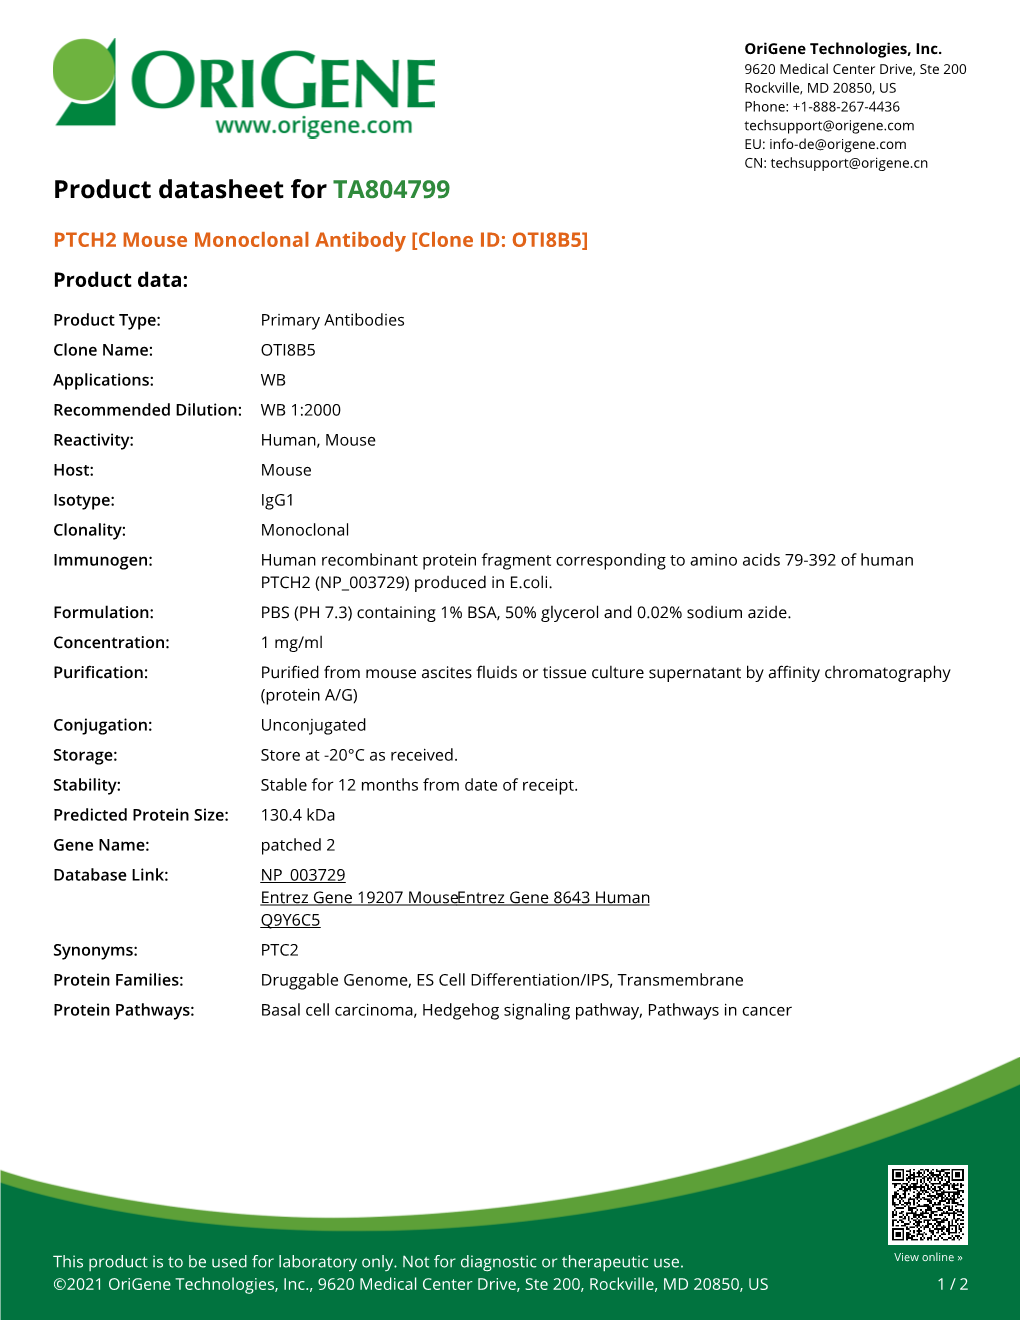 PTCH2 Mouse Monoclonal Antibody [Clone ID: OTI8B5] Product Data